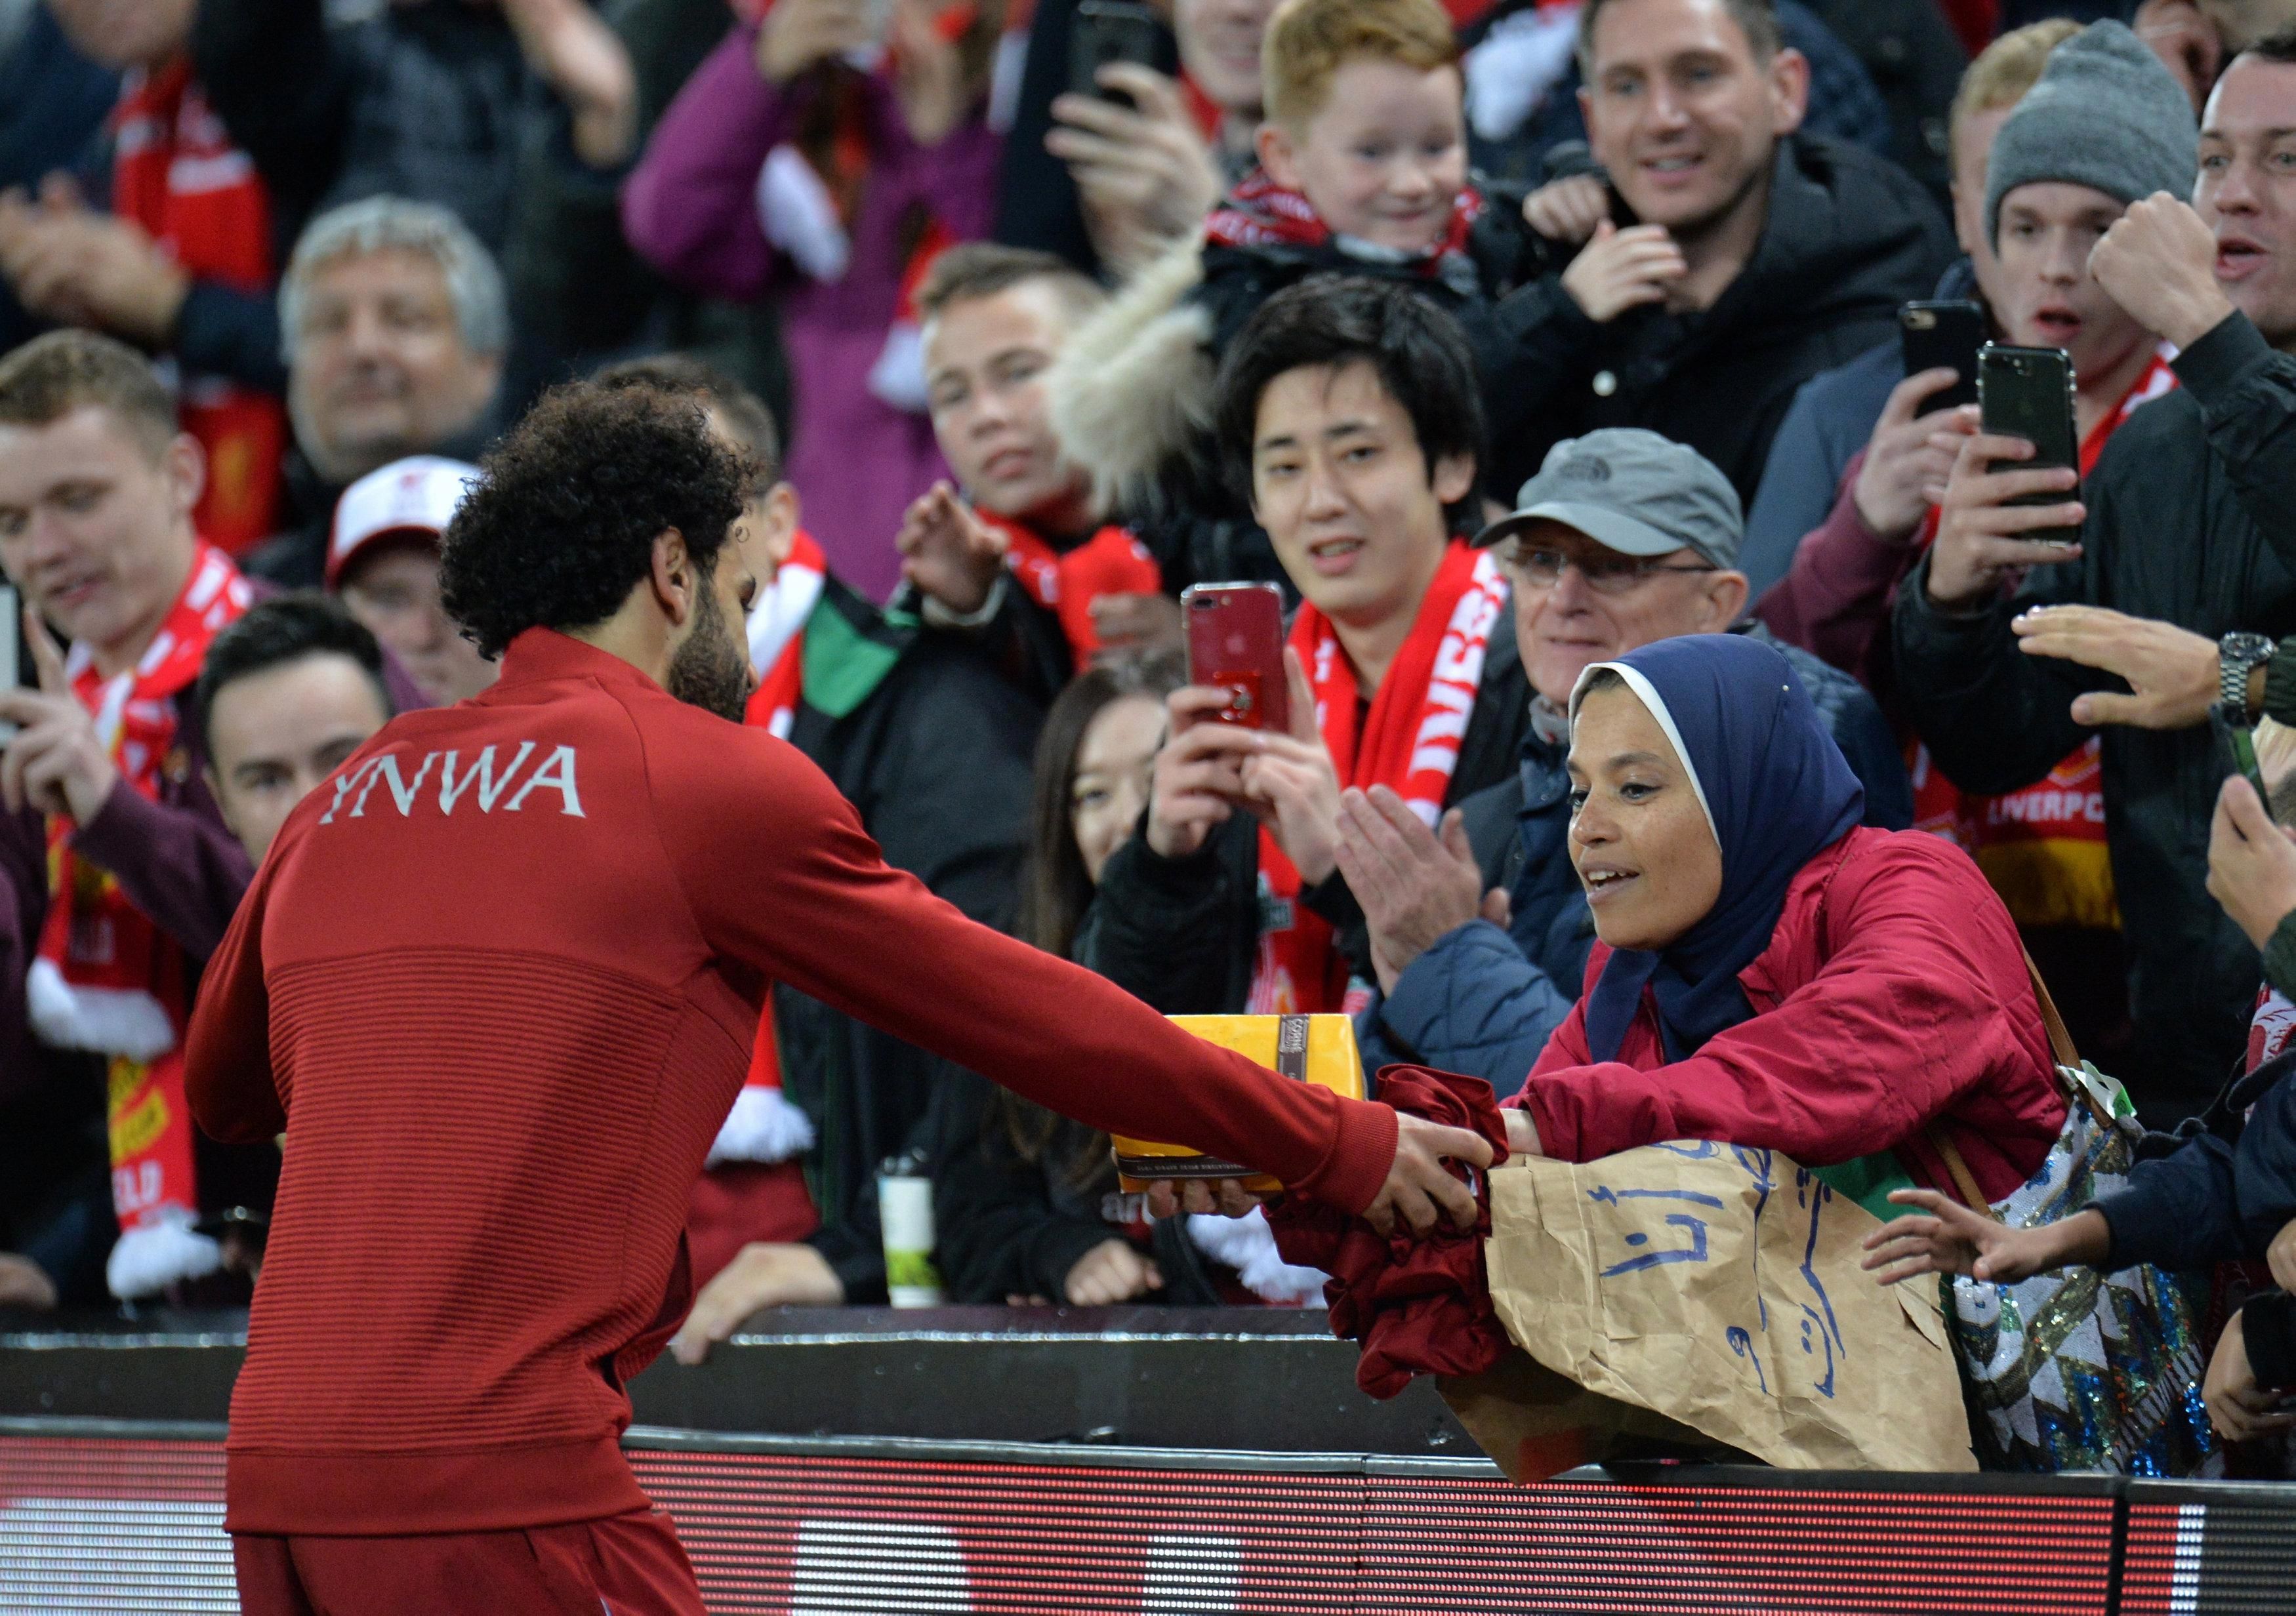 Mohamed Salah Liverpool fan present Champions League